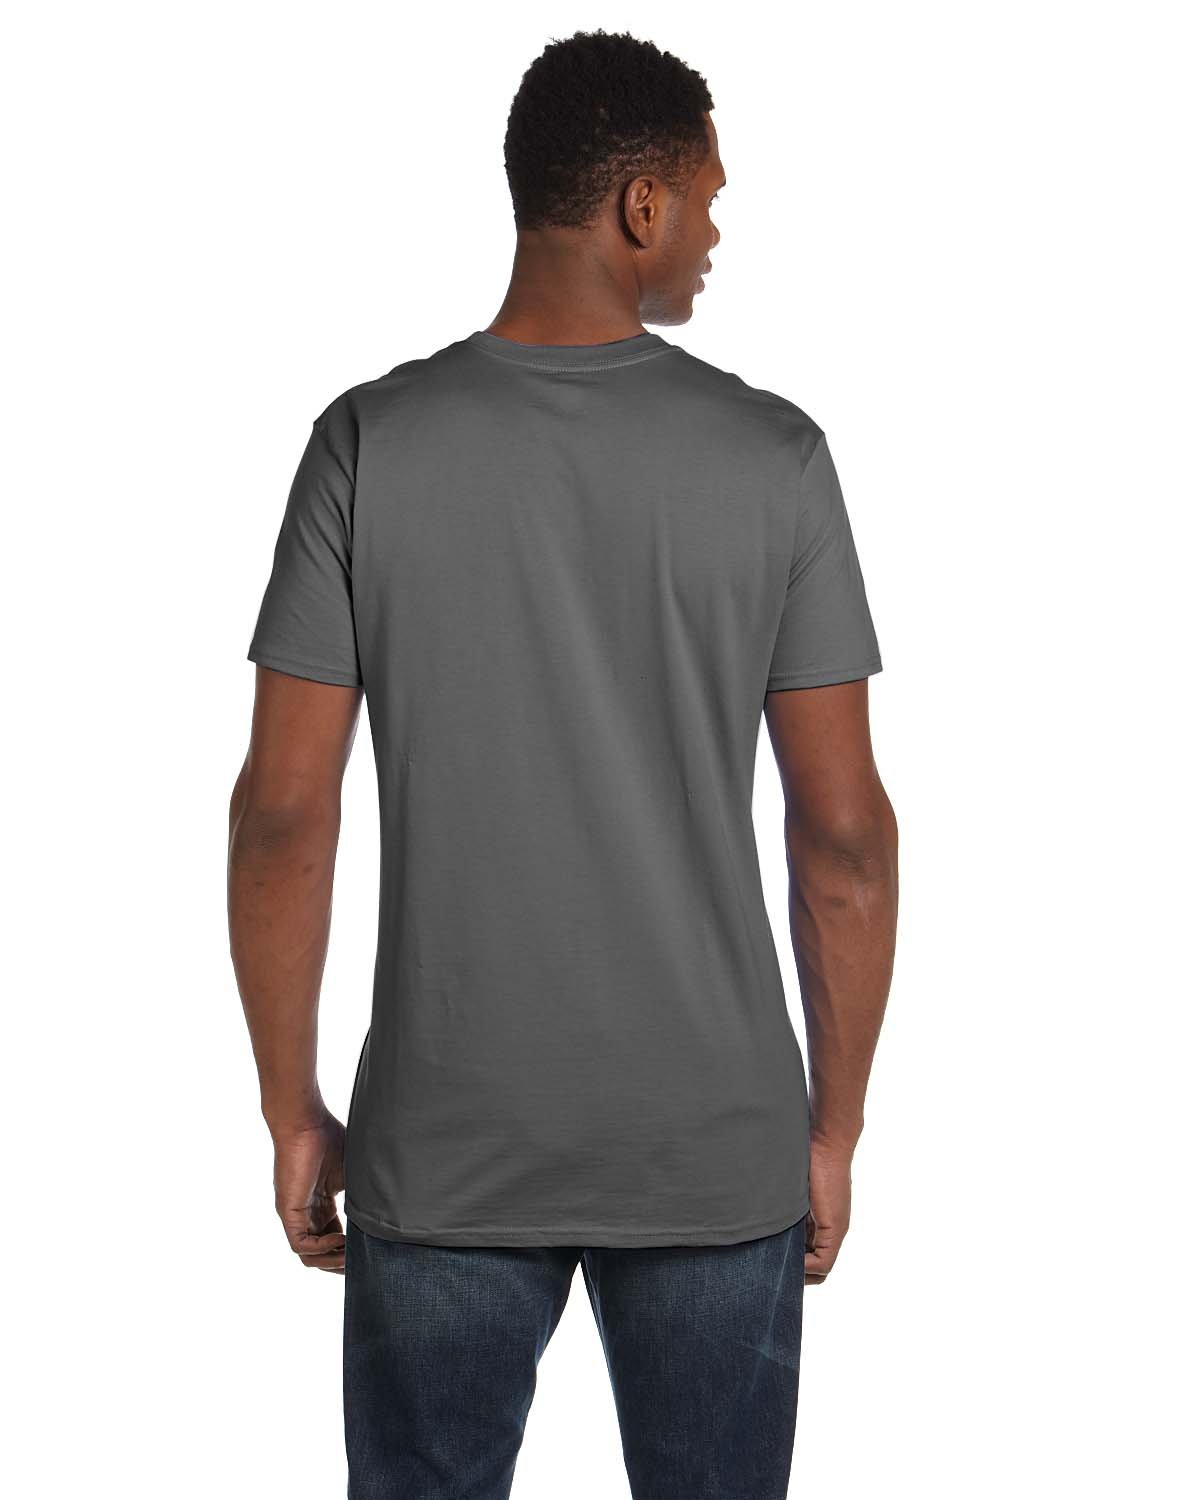 Hanes Men's Nano Premium Cotton T-Shirt (Pack of 2), Smoke Gray, X-Large